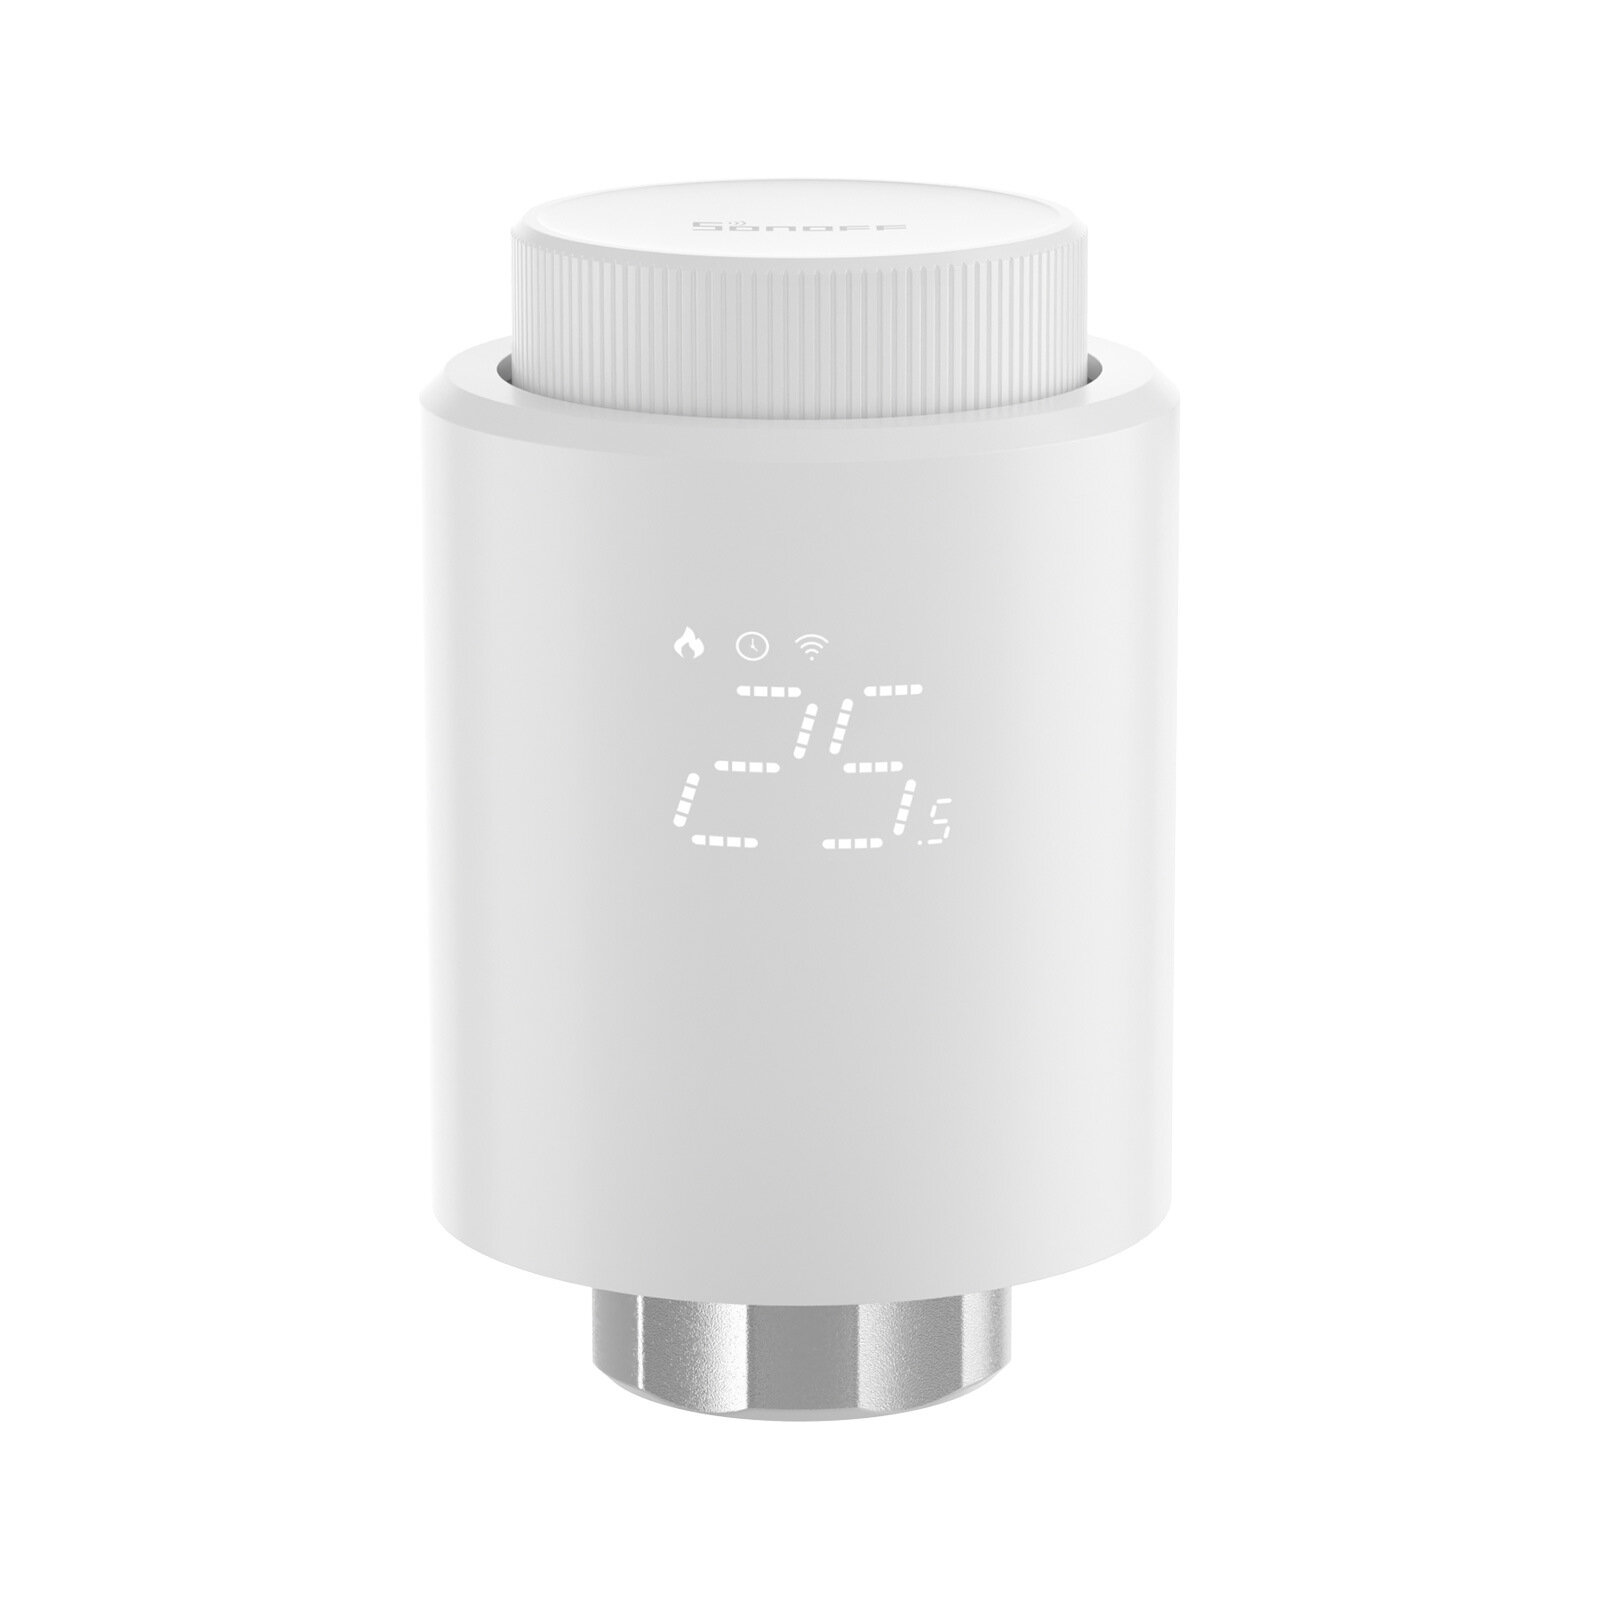 

SONOFF TRVZB Smart Zigbe Thermostatic Radiator Valve Intelligent Thermostat Temperature Controller APP&Voice Control Wor